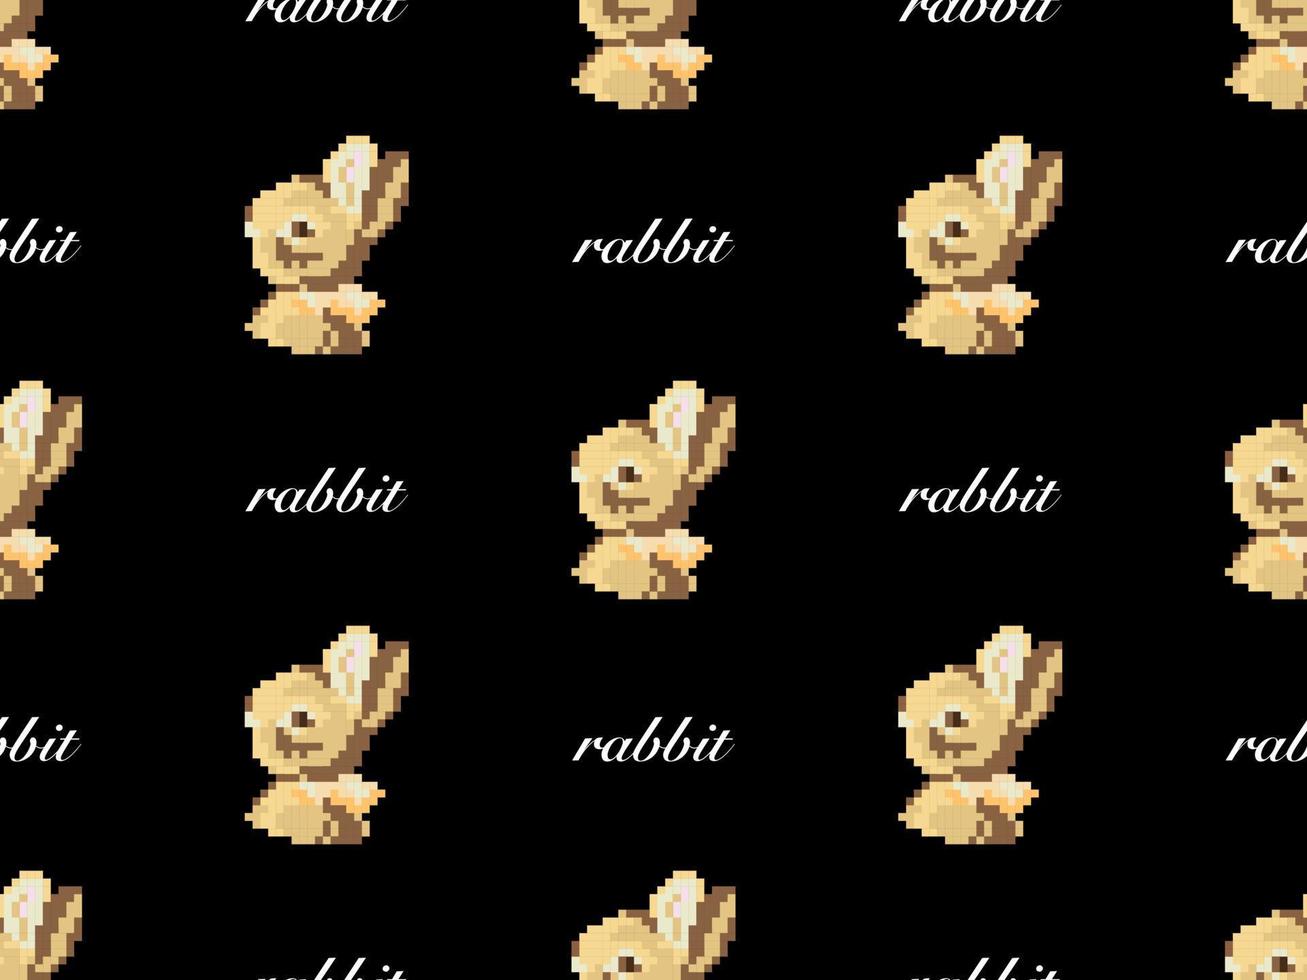 Rabbit cartoon character seamless pattern on black background.  Pixel style vector